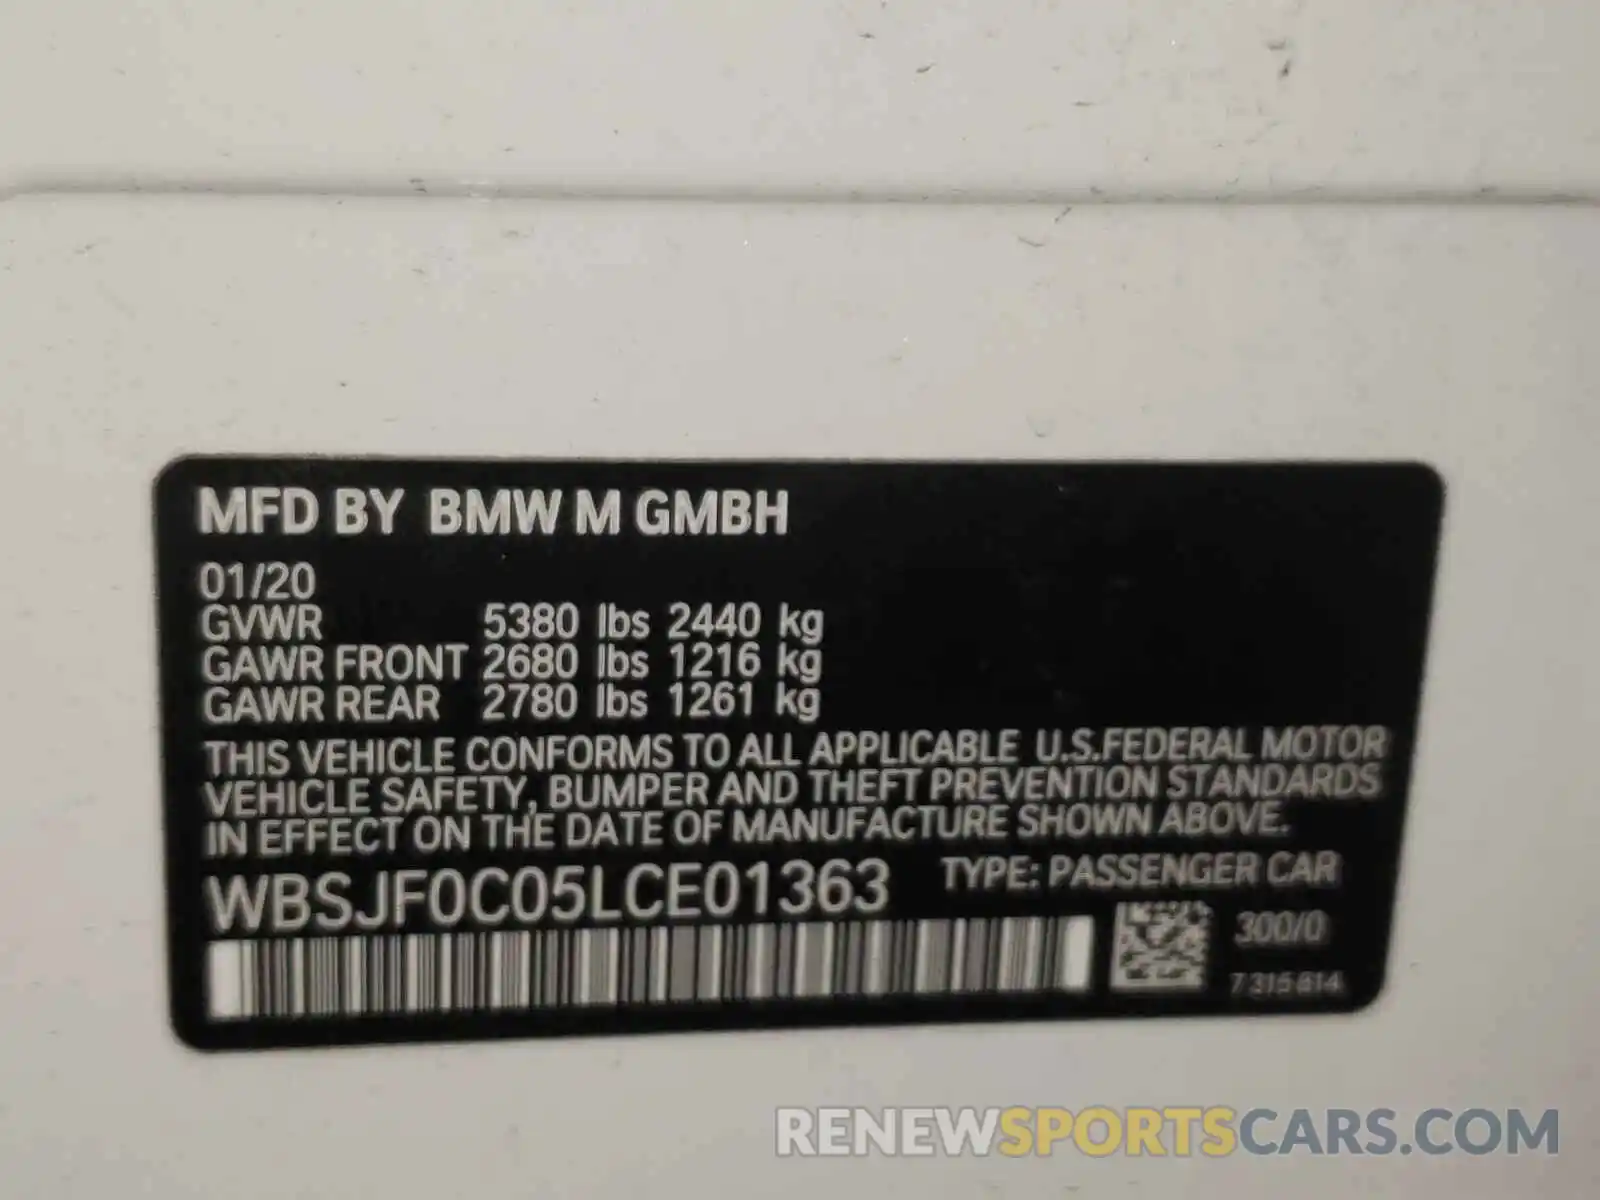 10 Photograph of a damaged car WBSJF0C05LCE01363 BMW M5 2020